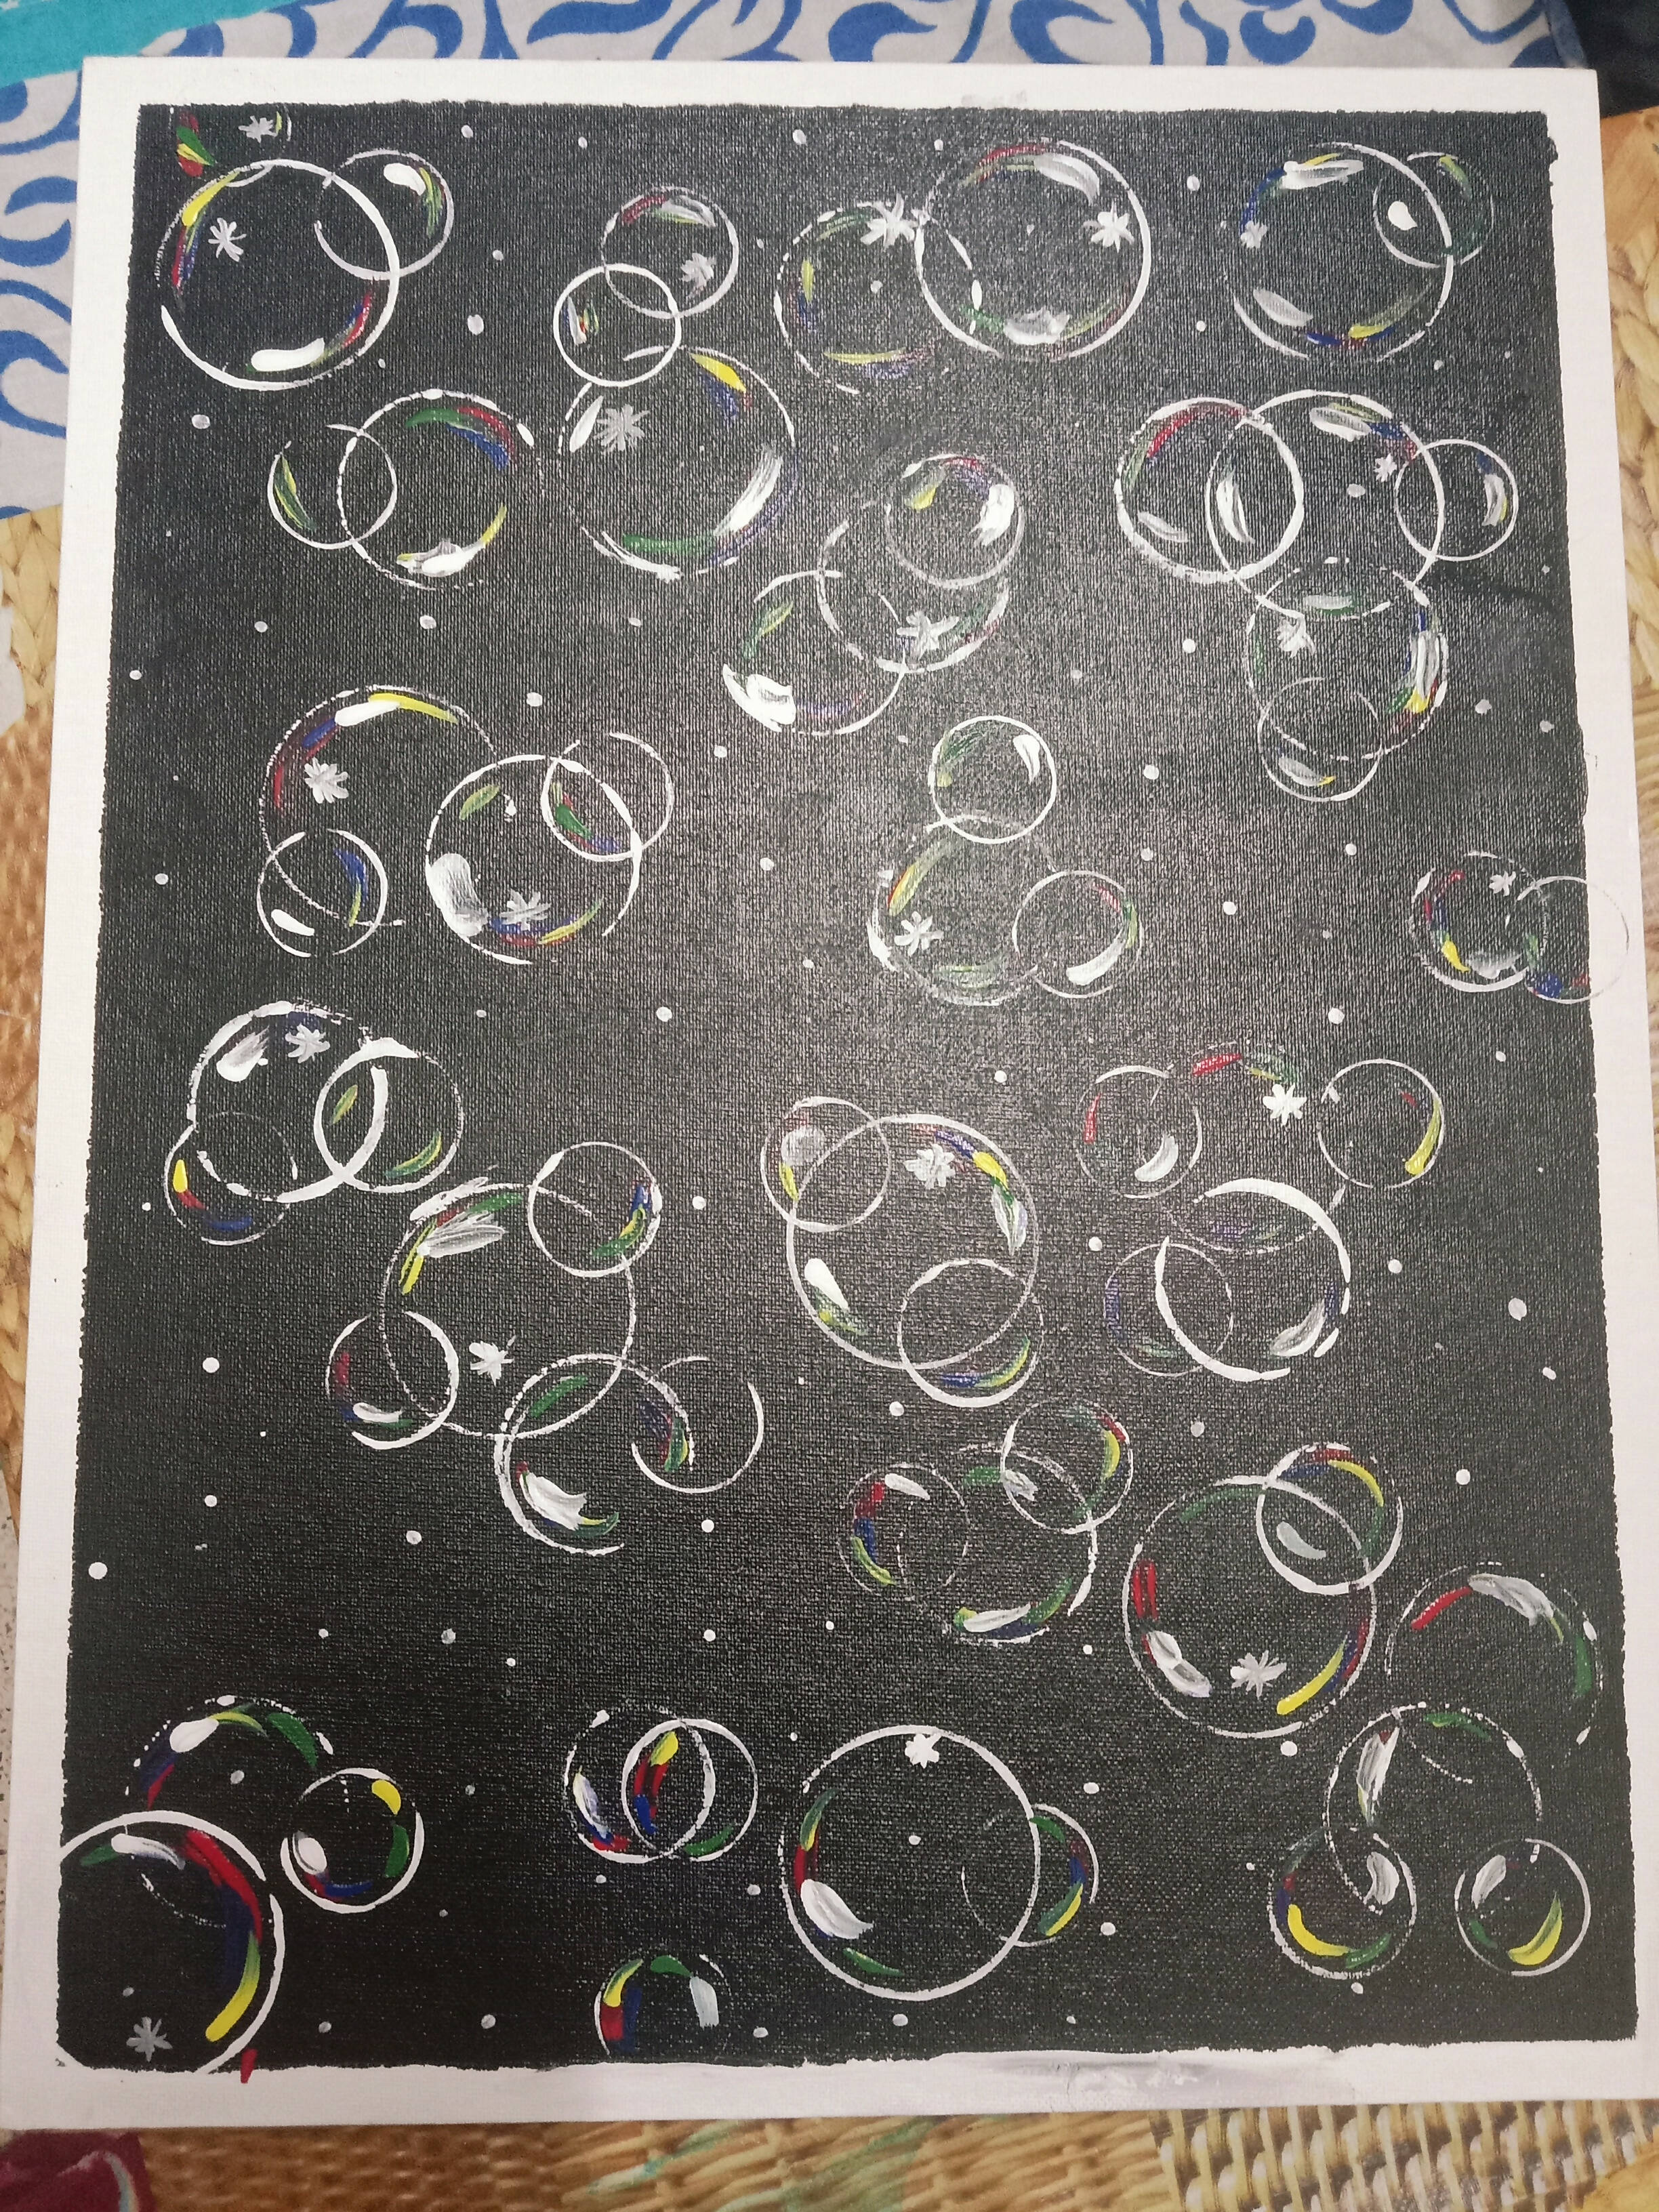 Bubbles painting